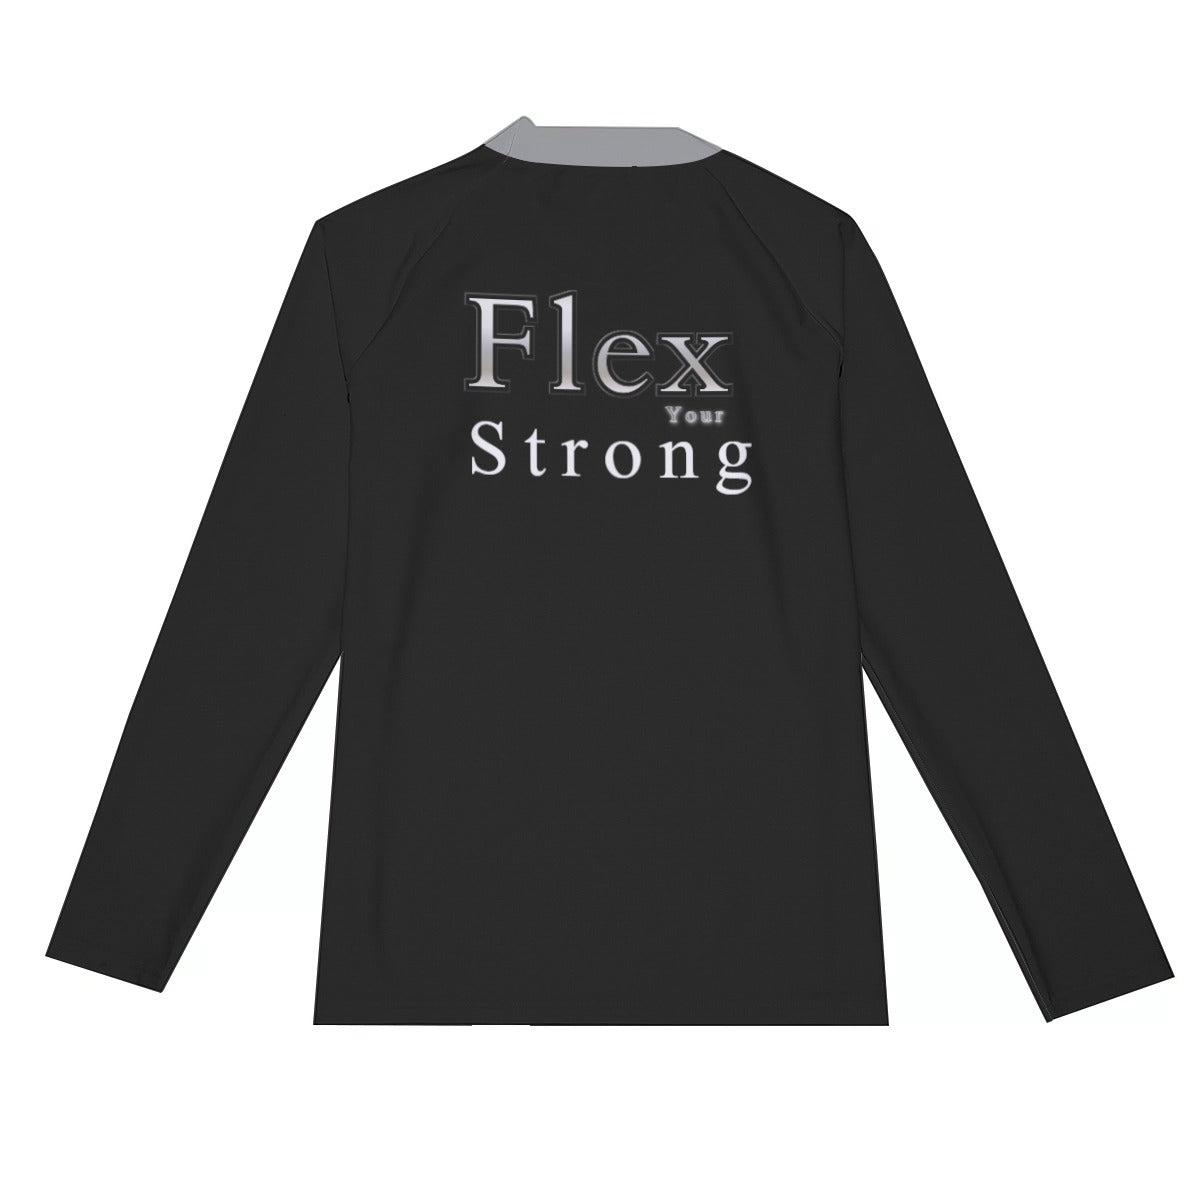 Flex Strong - Men's Rash Shirt